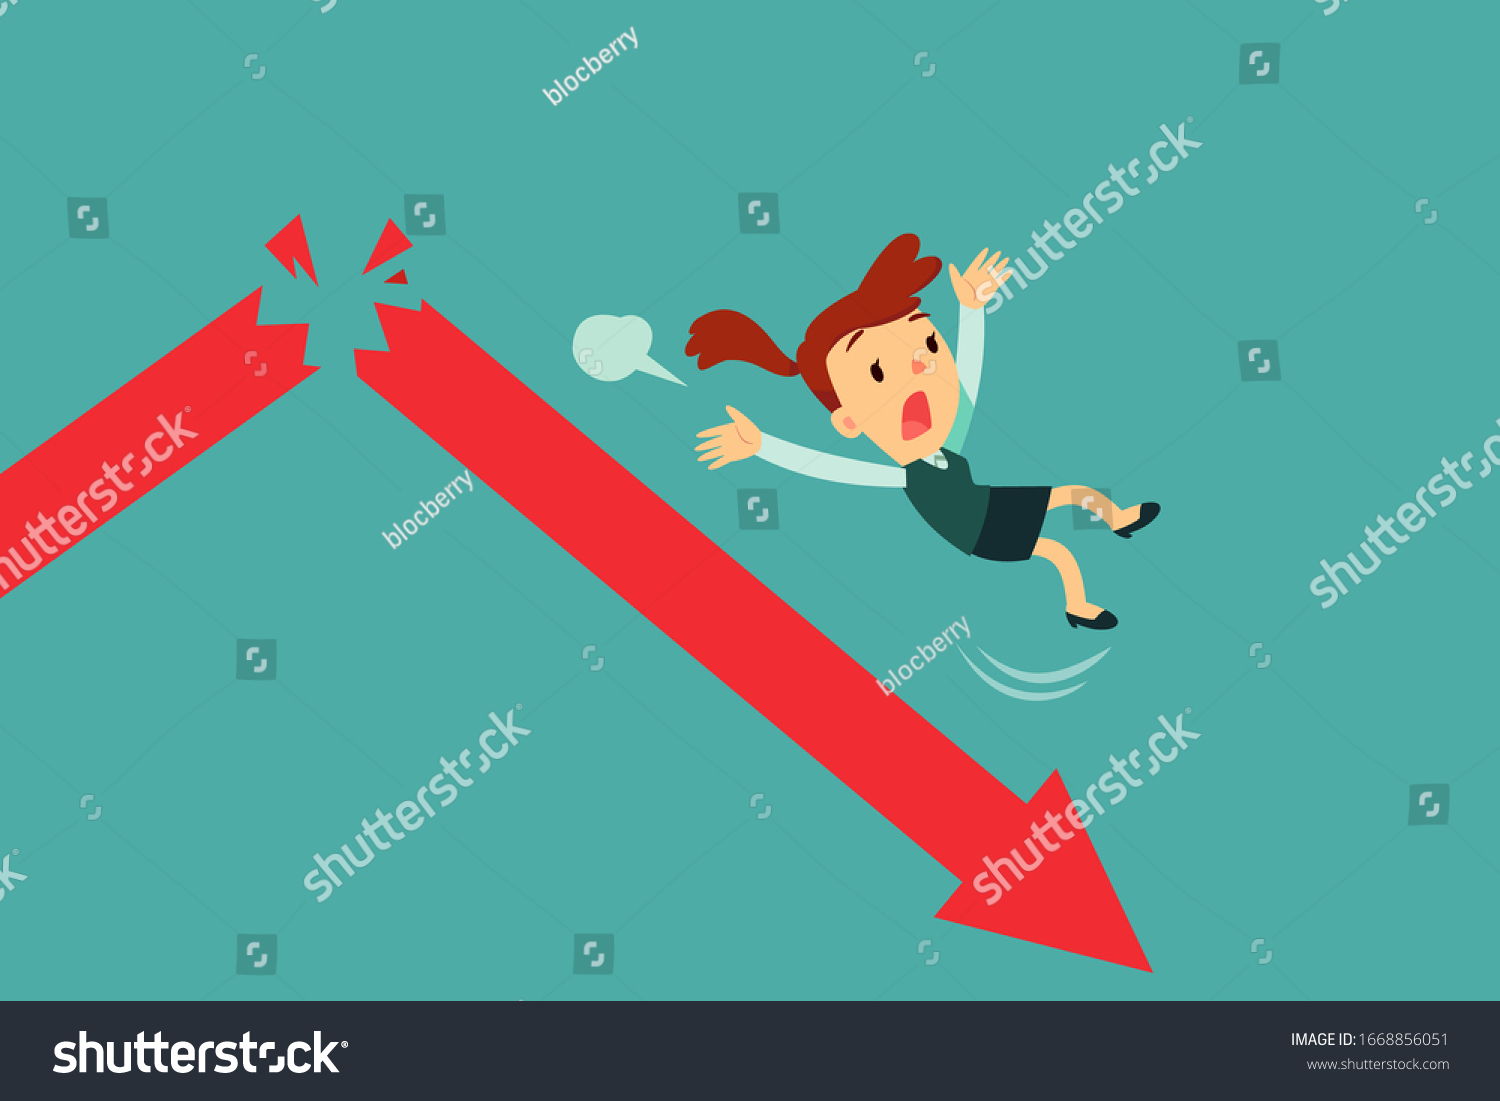 SVG of Businesswoman falling from broken arrow graph. Economic crisis business concept. svg